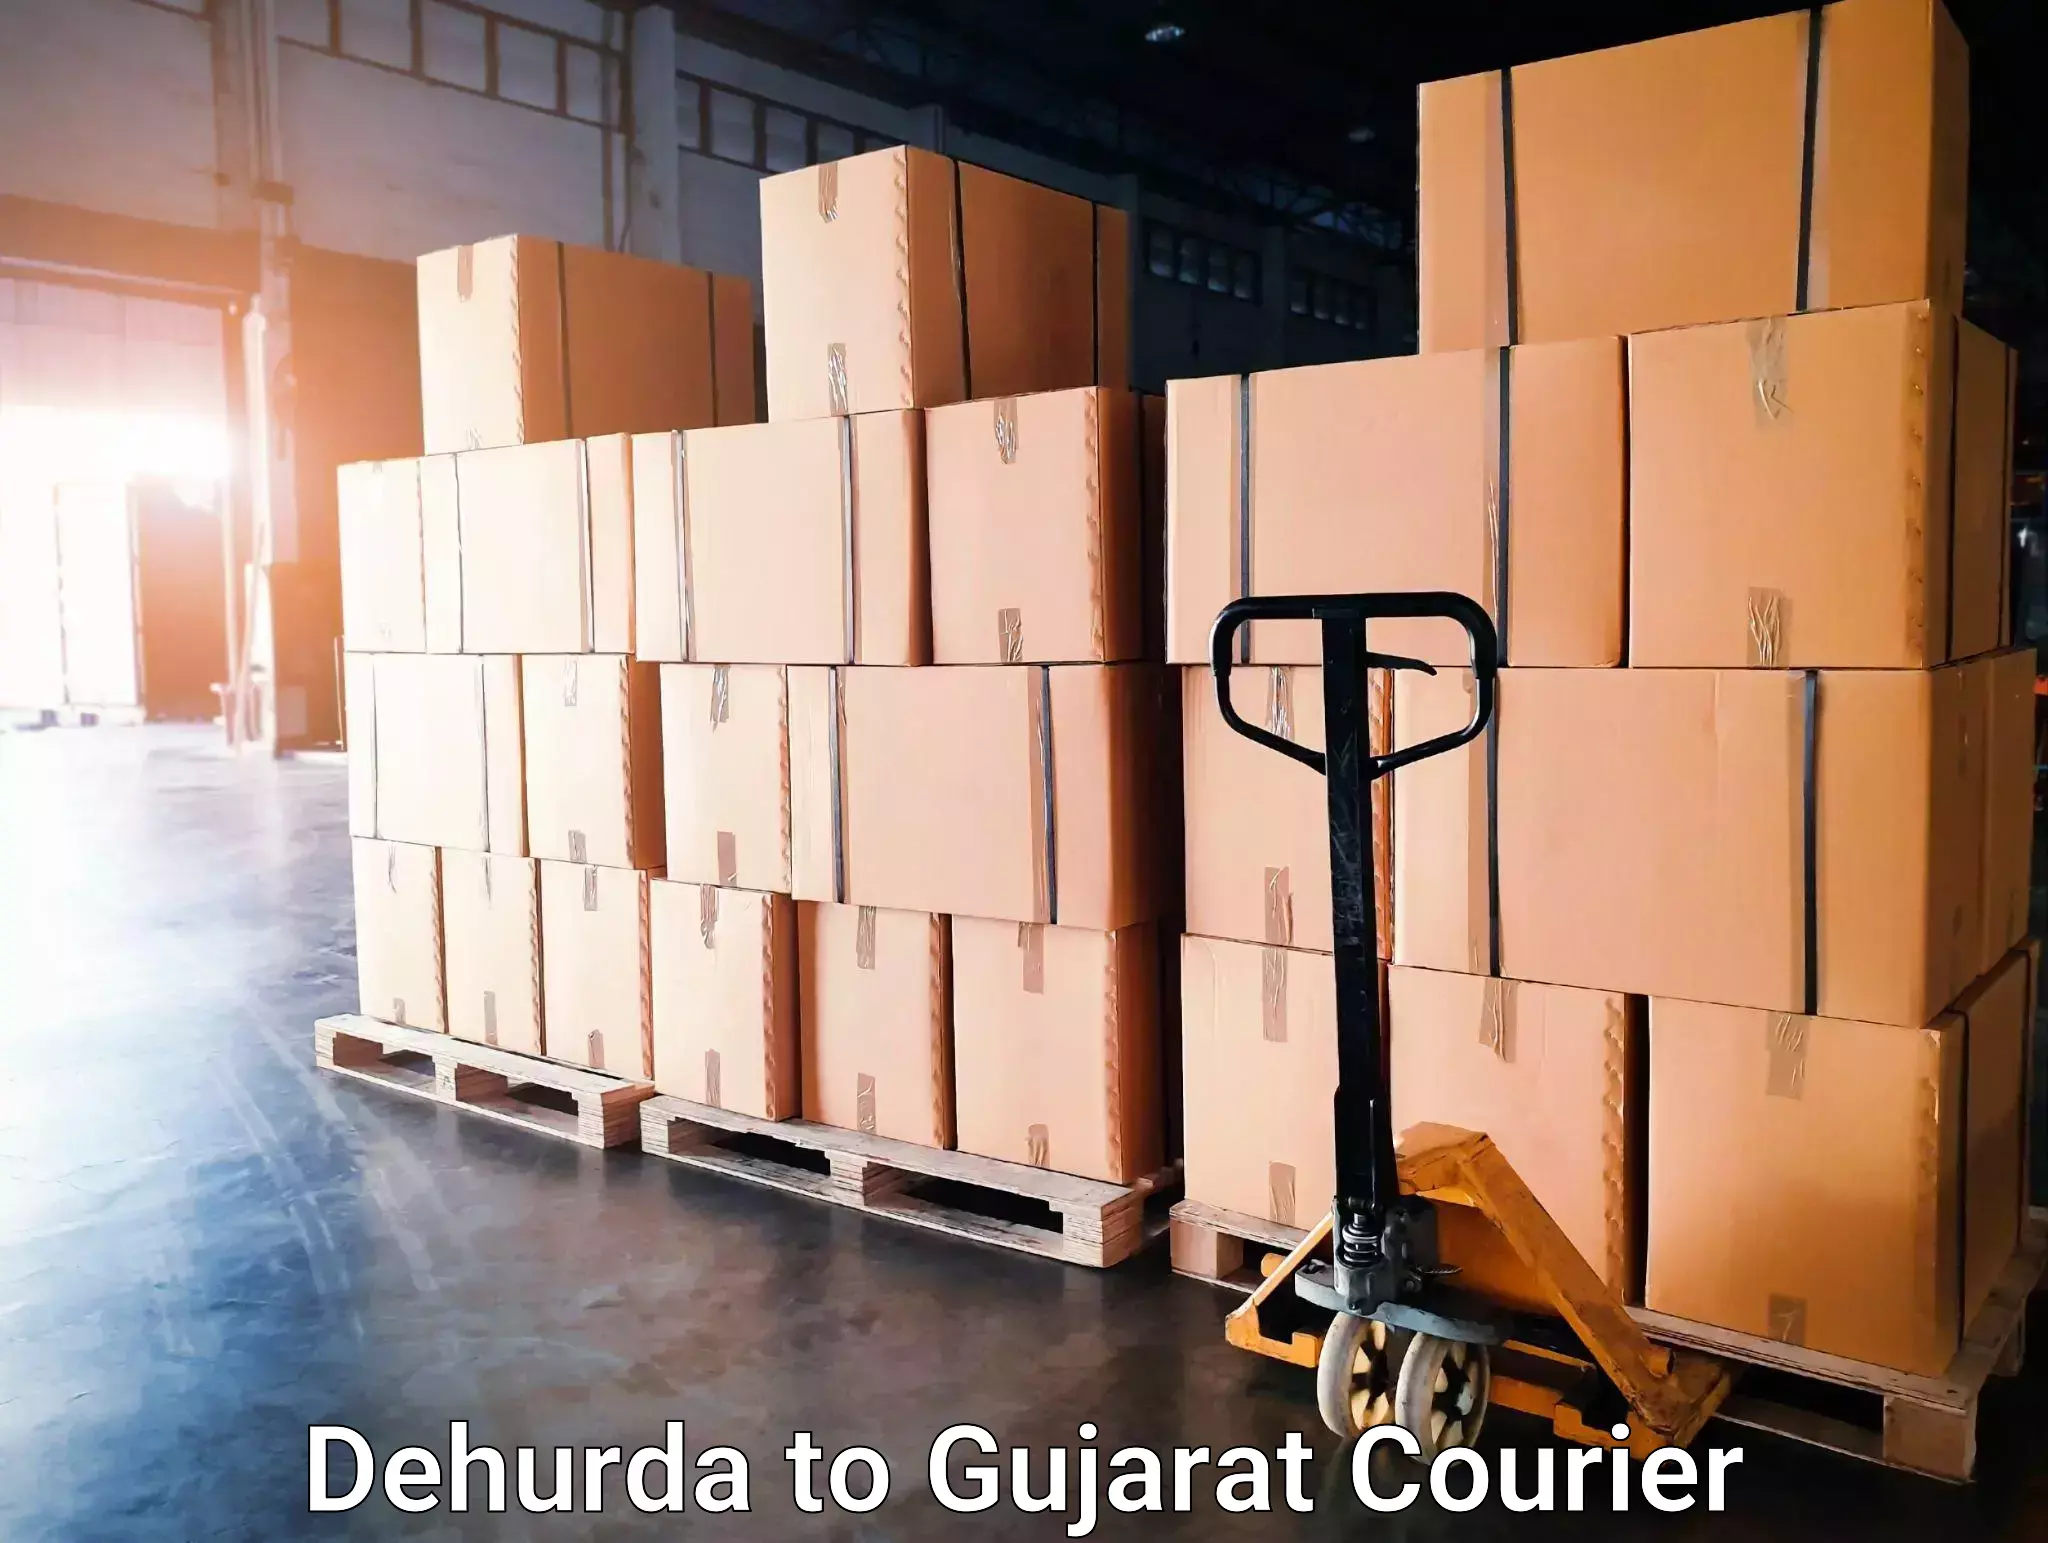 Courier service comparison Dehurda to Kutiyana